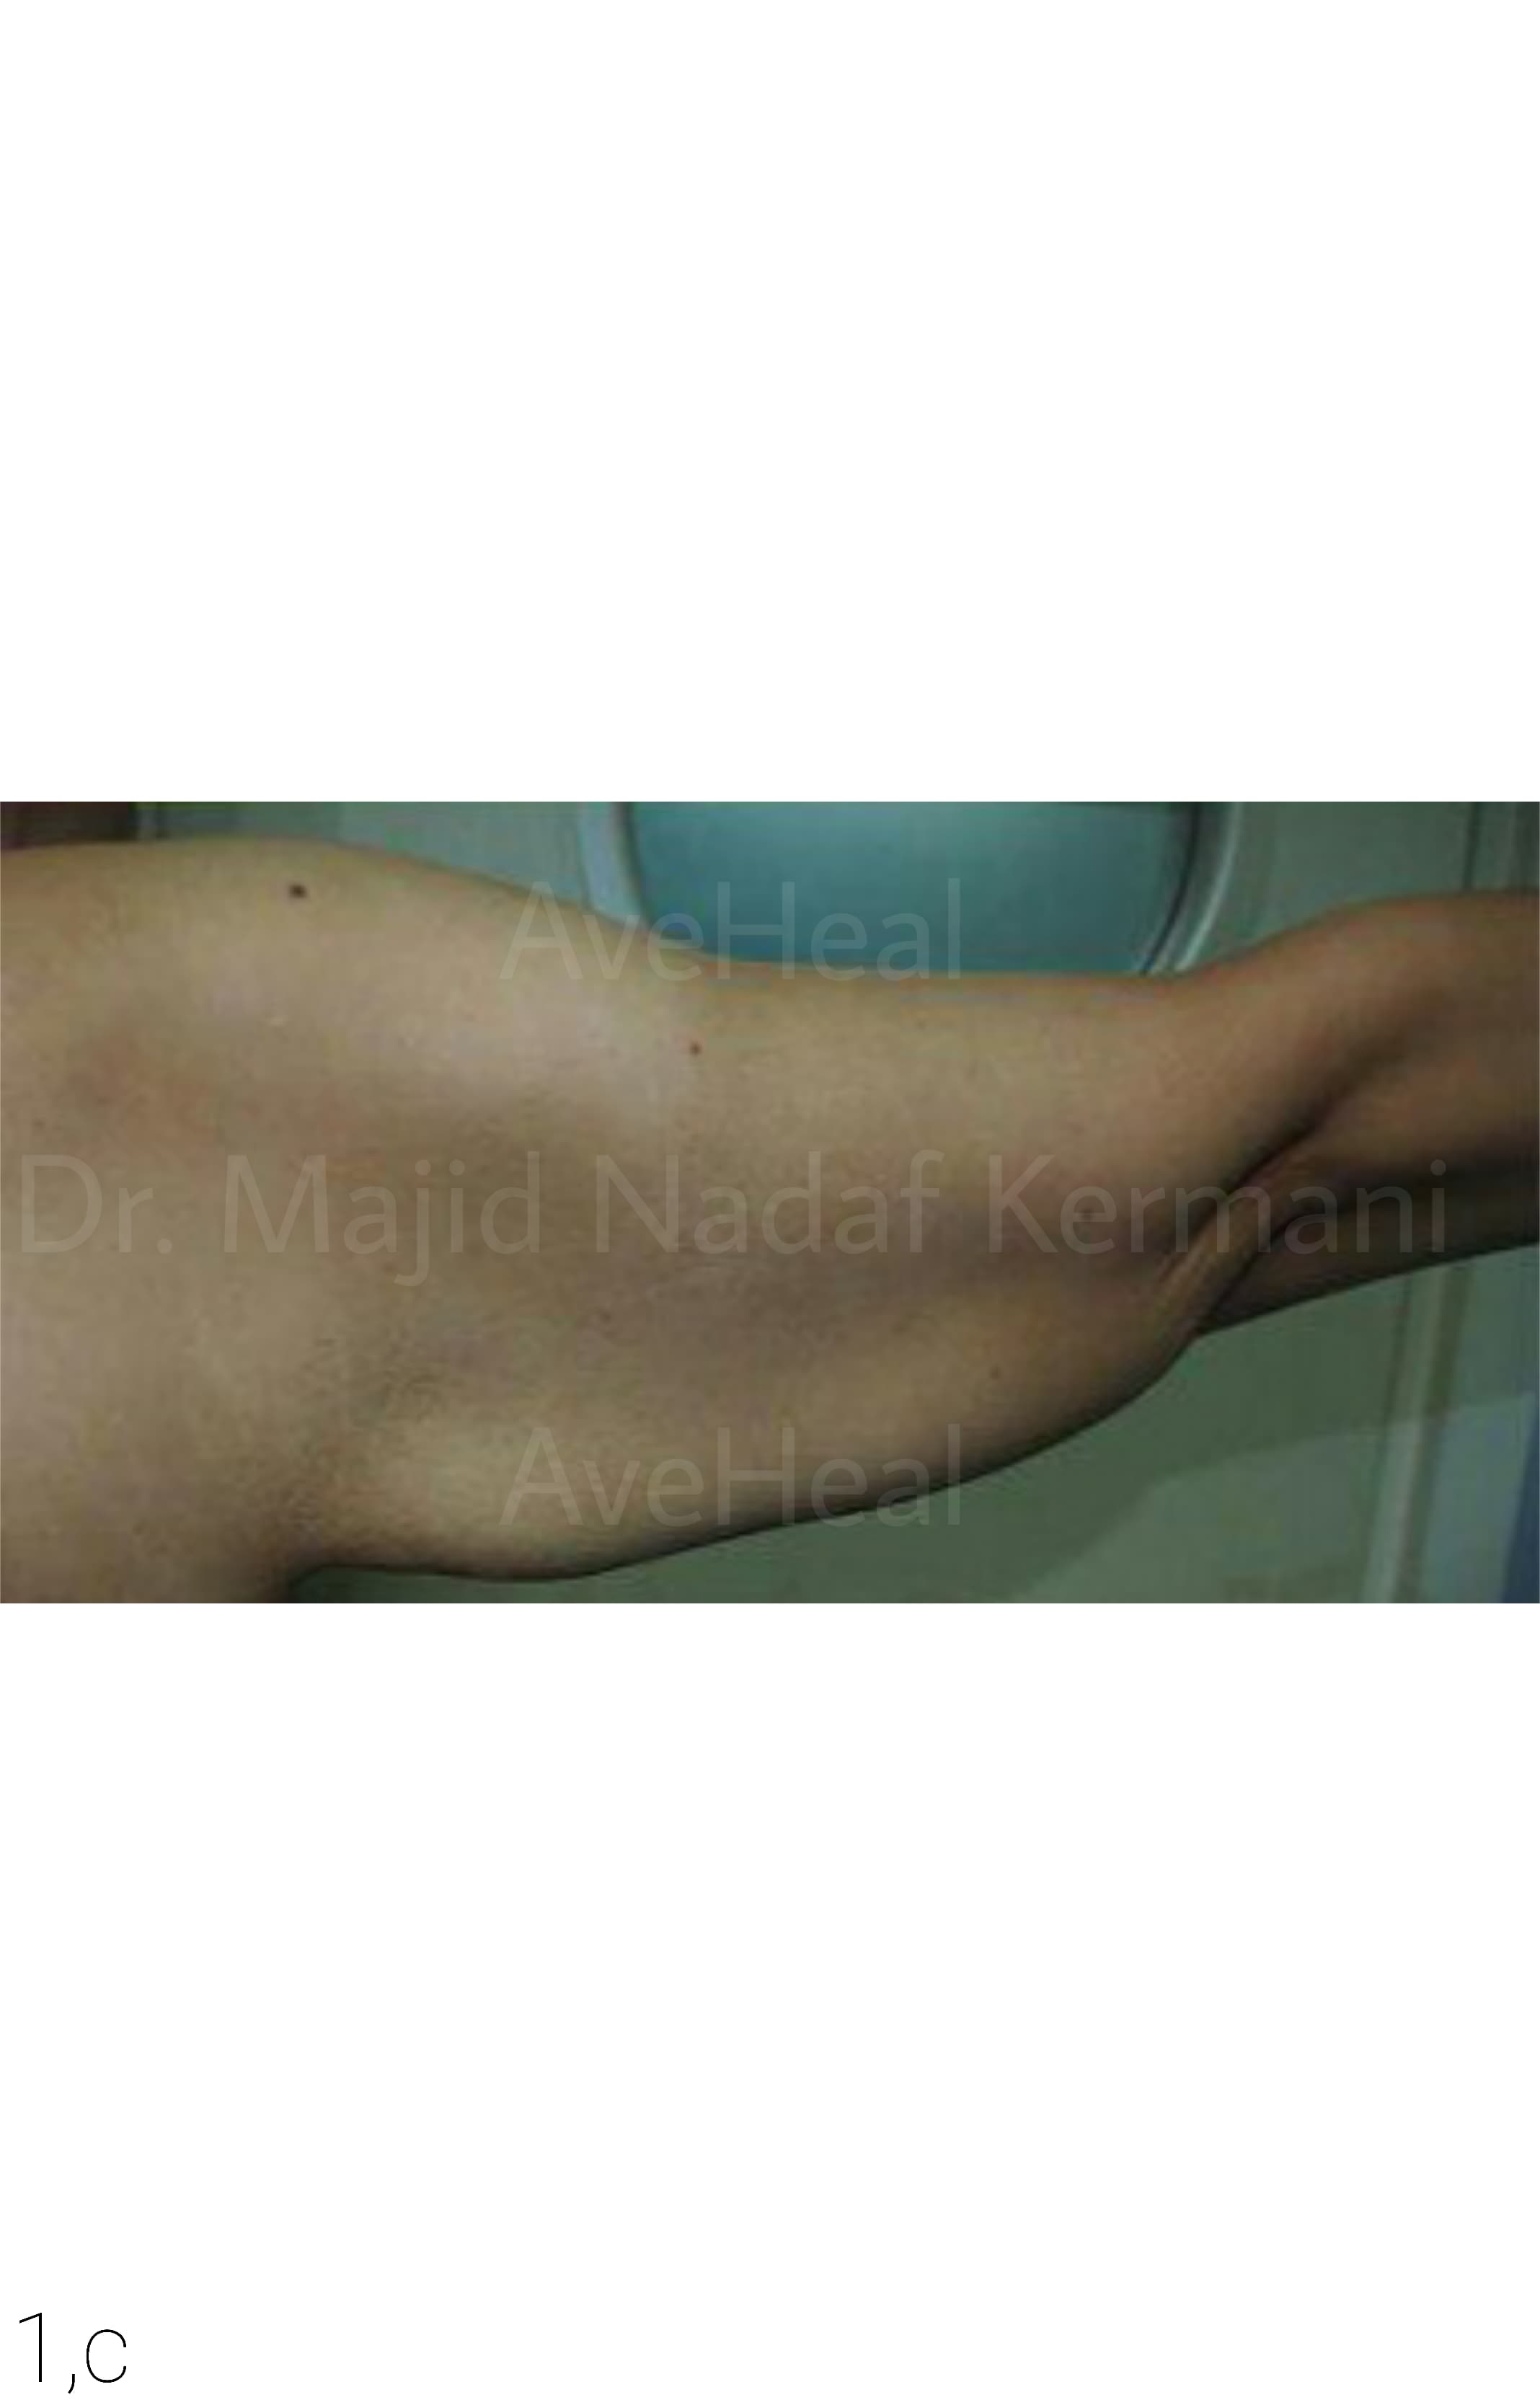 before-arm-lift-dr-majid-nadaf-kermani